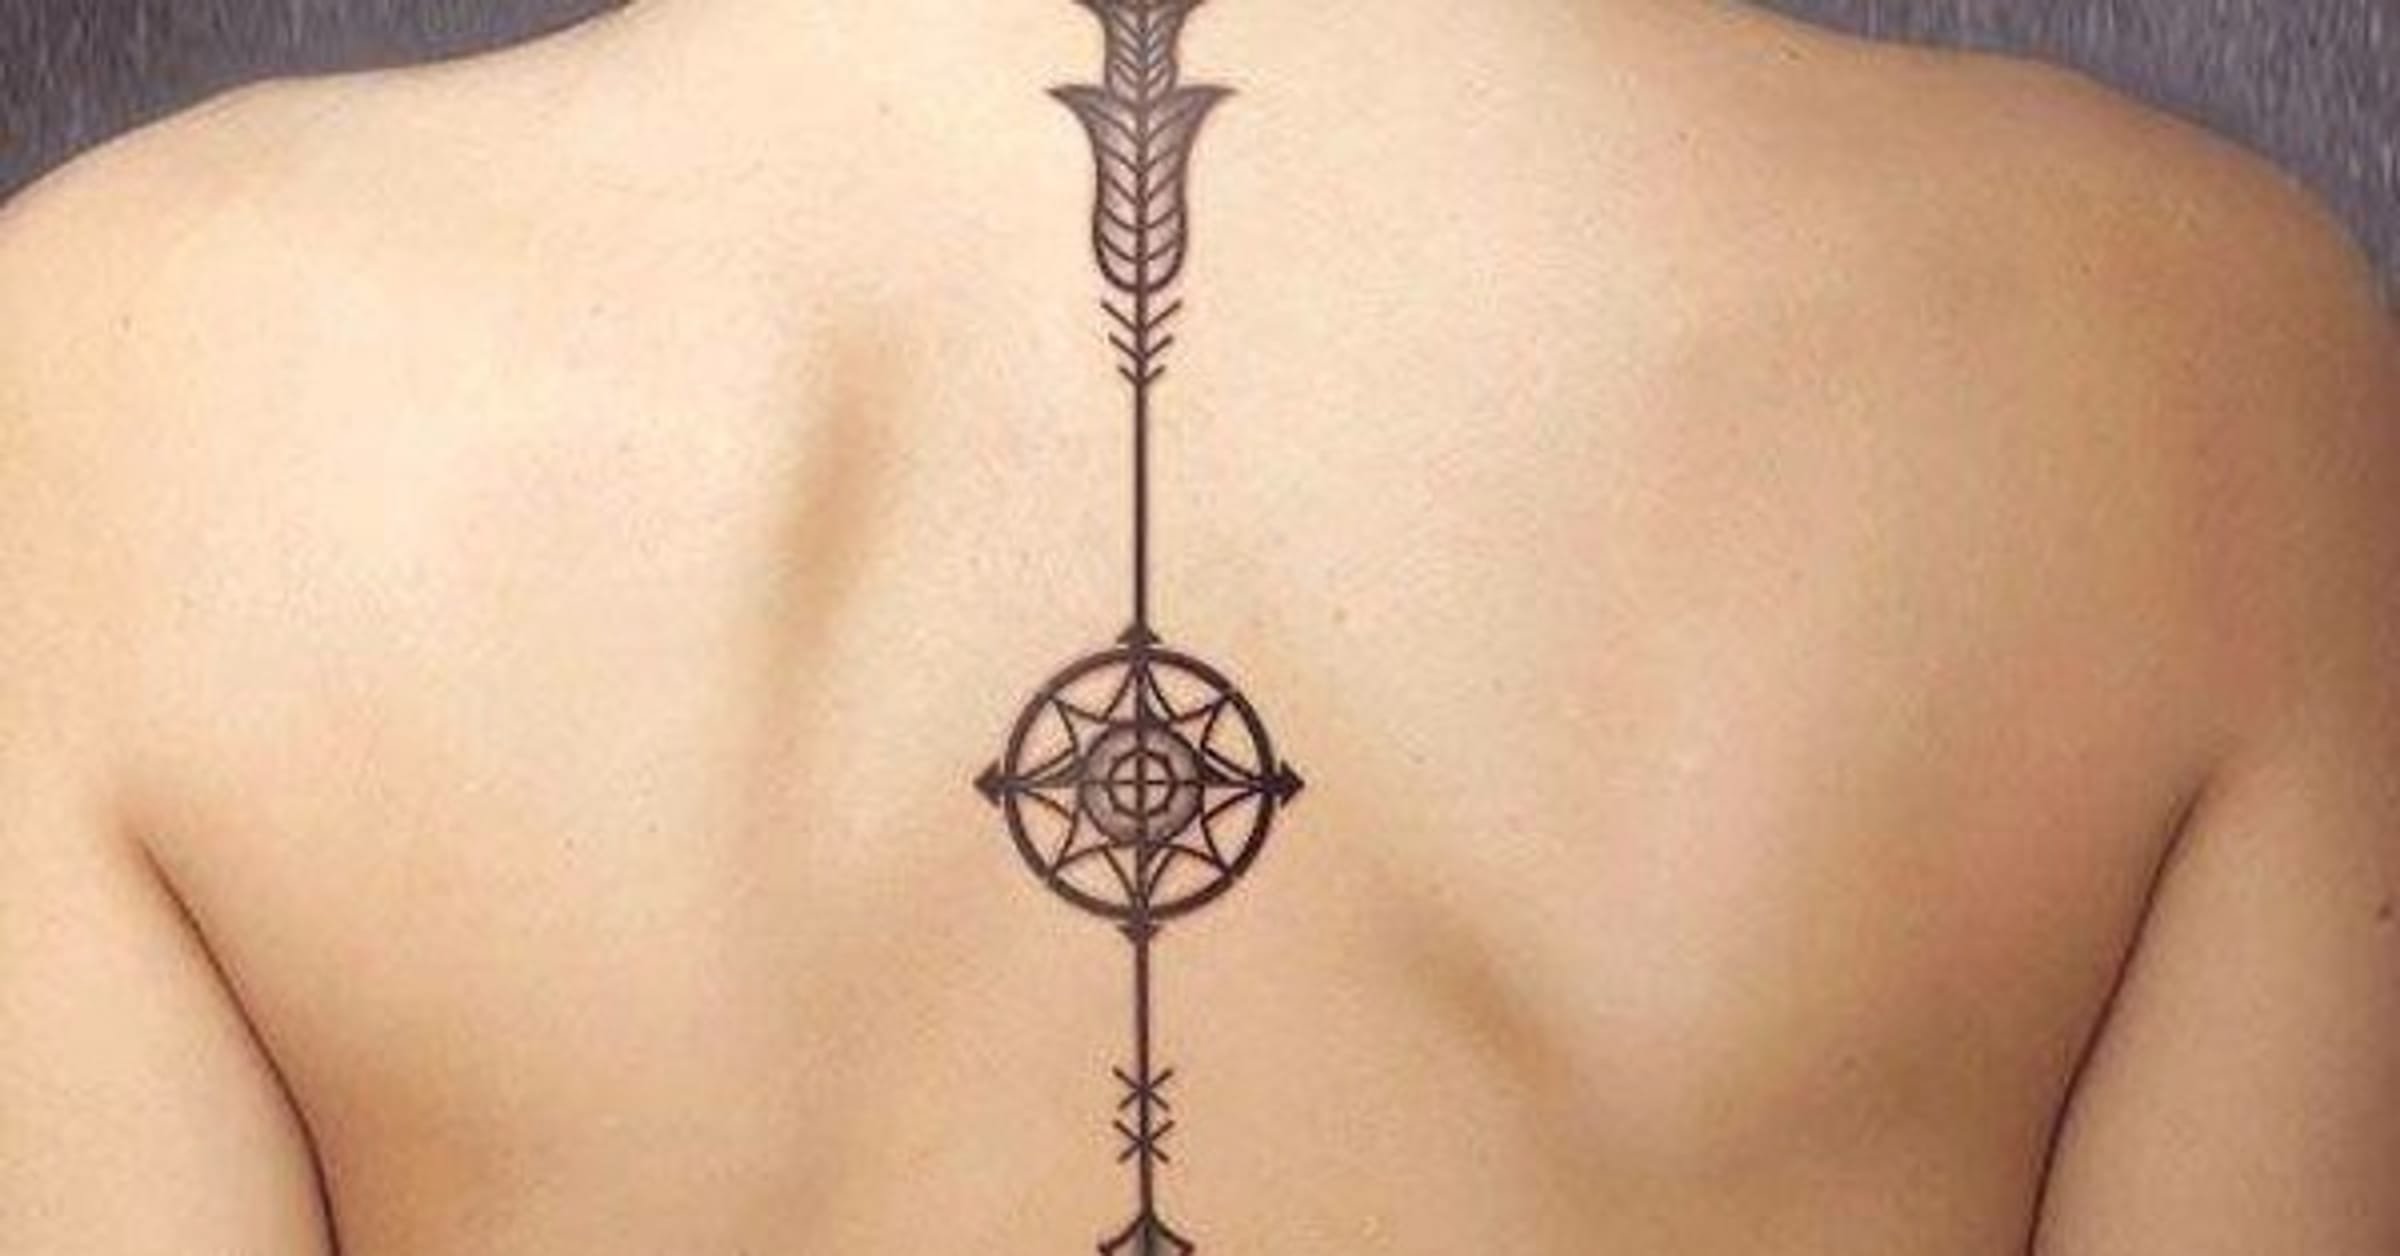 tribal spine tattoo